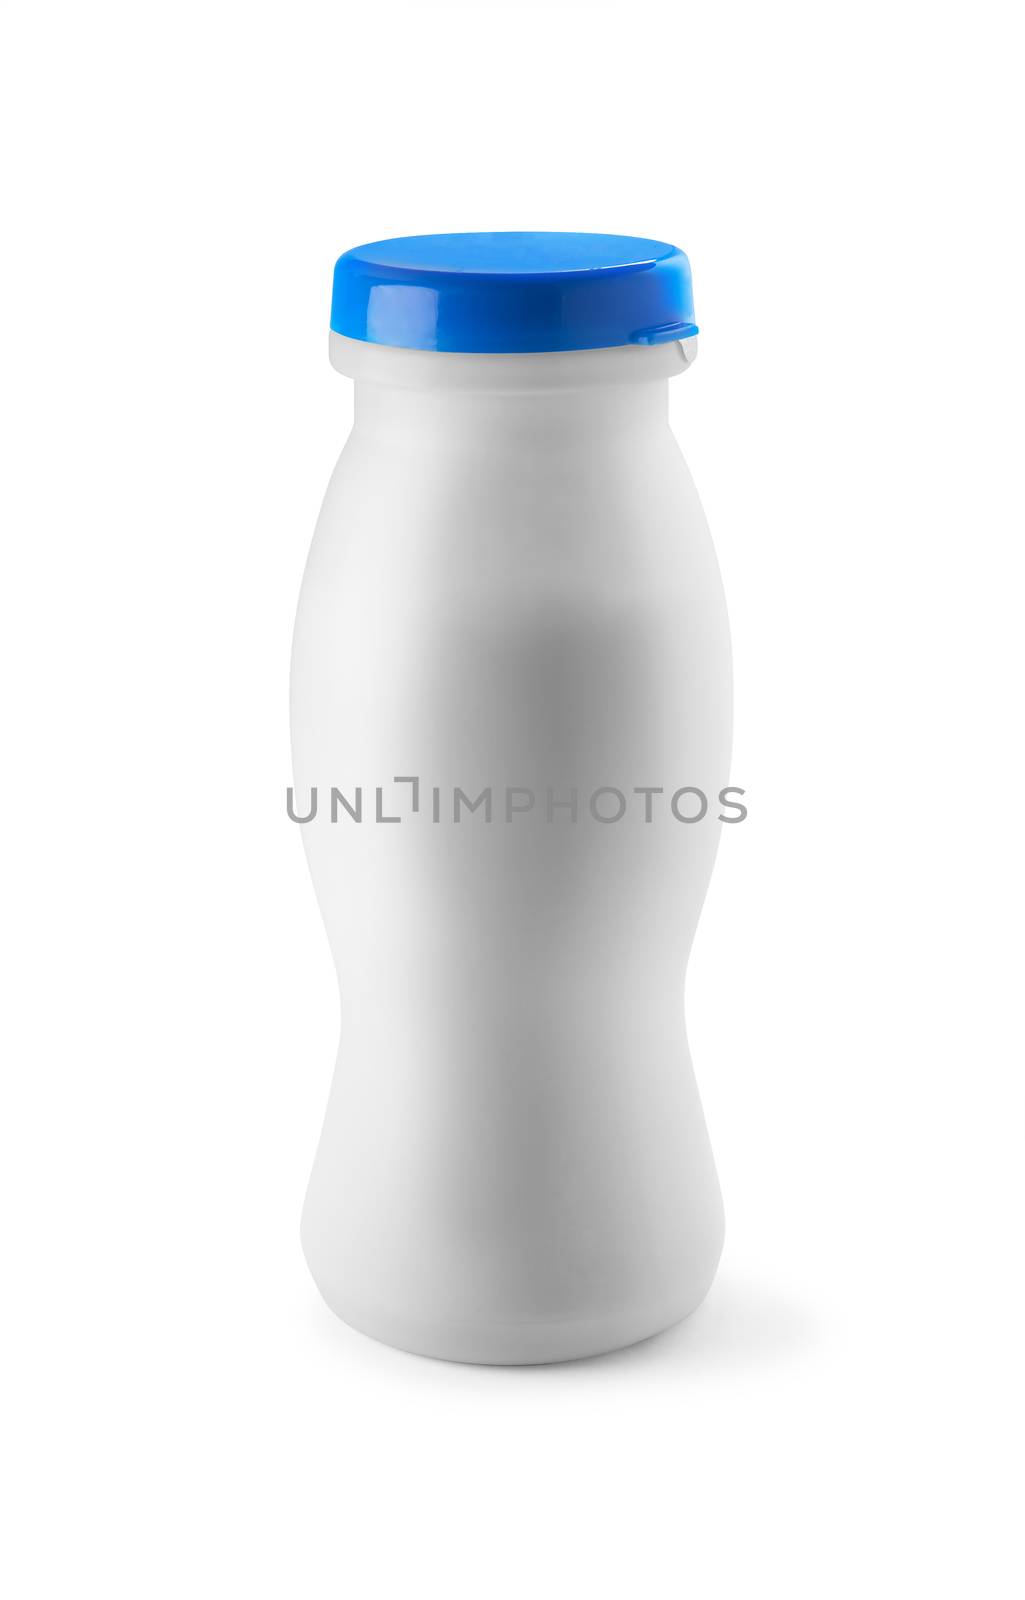 White plastic bottle. Clean pattern for packaging design